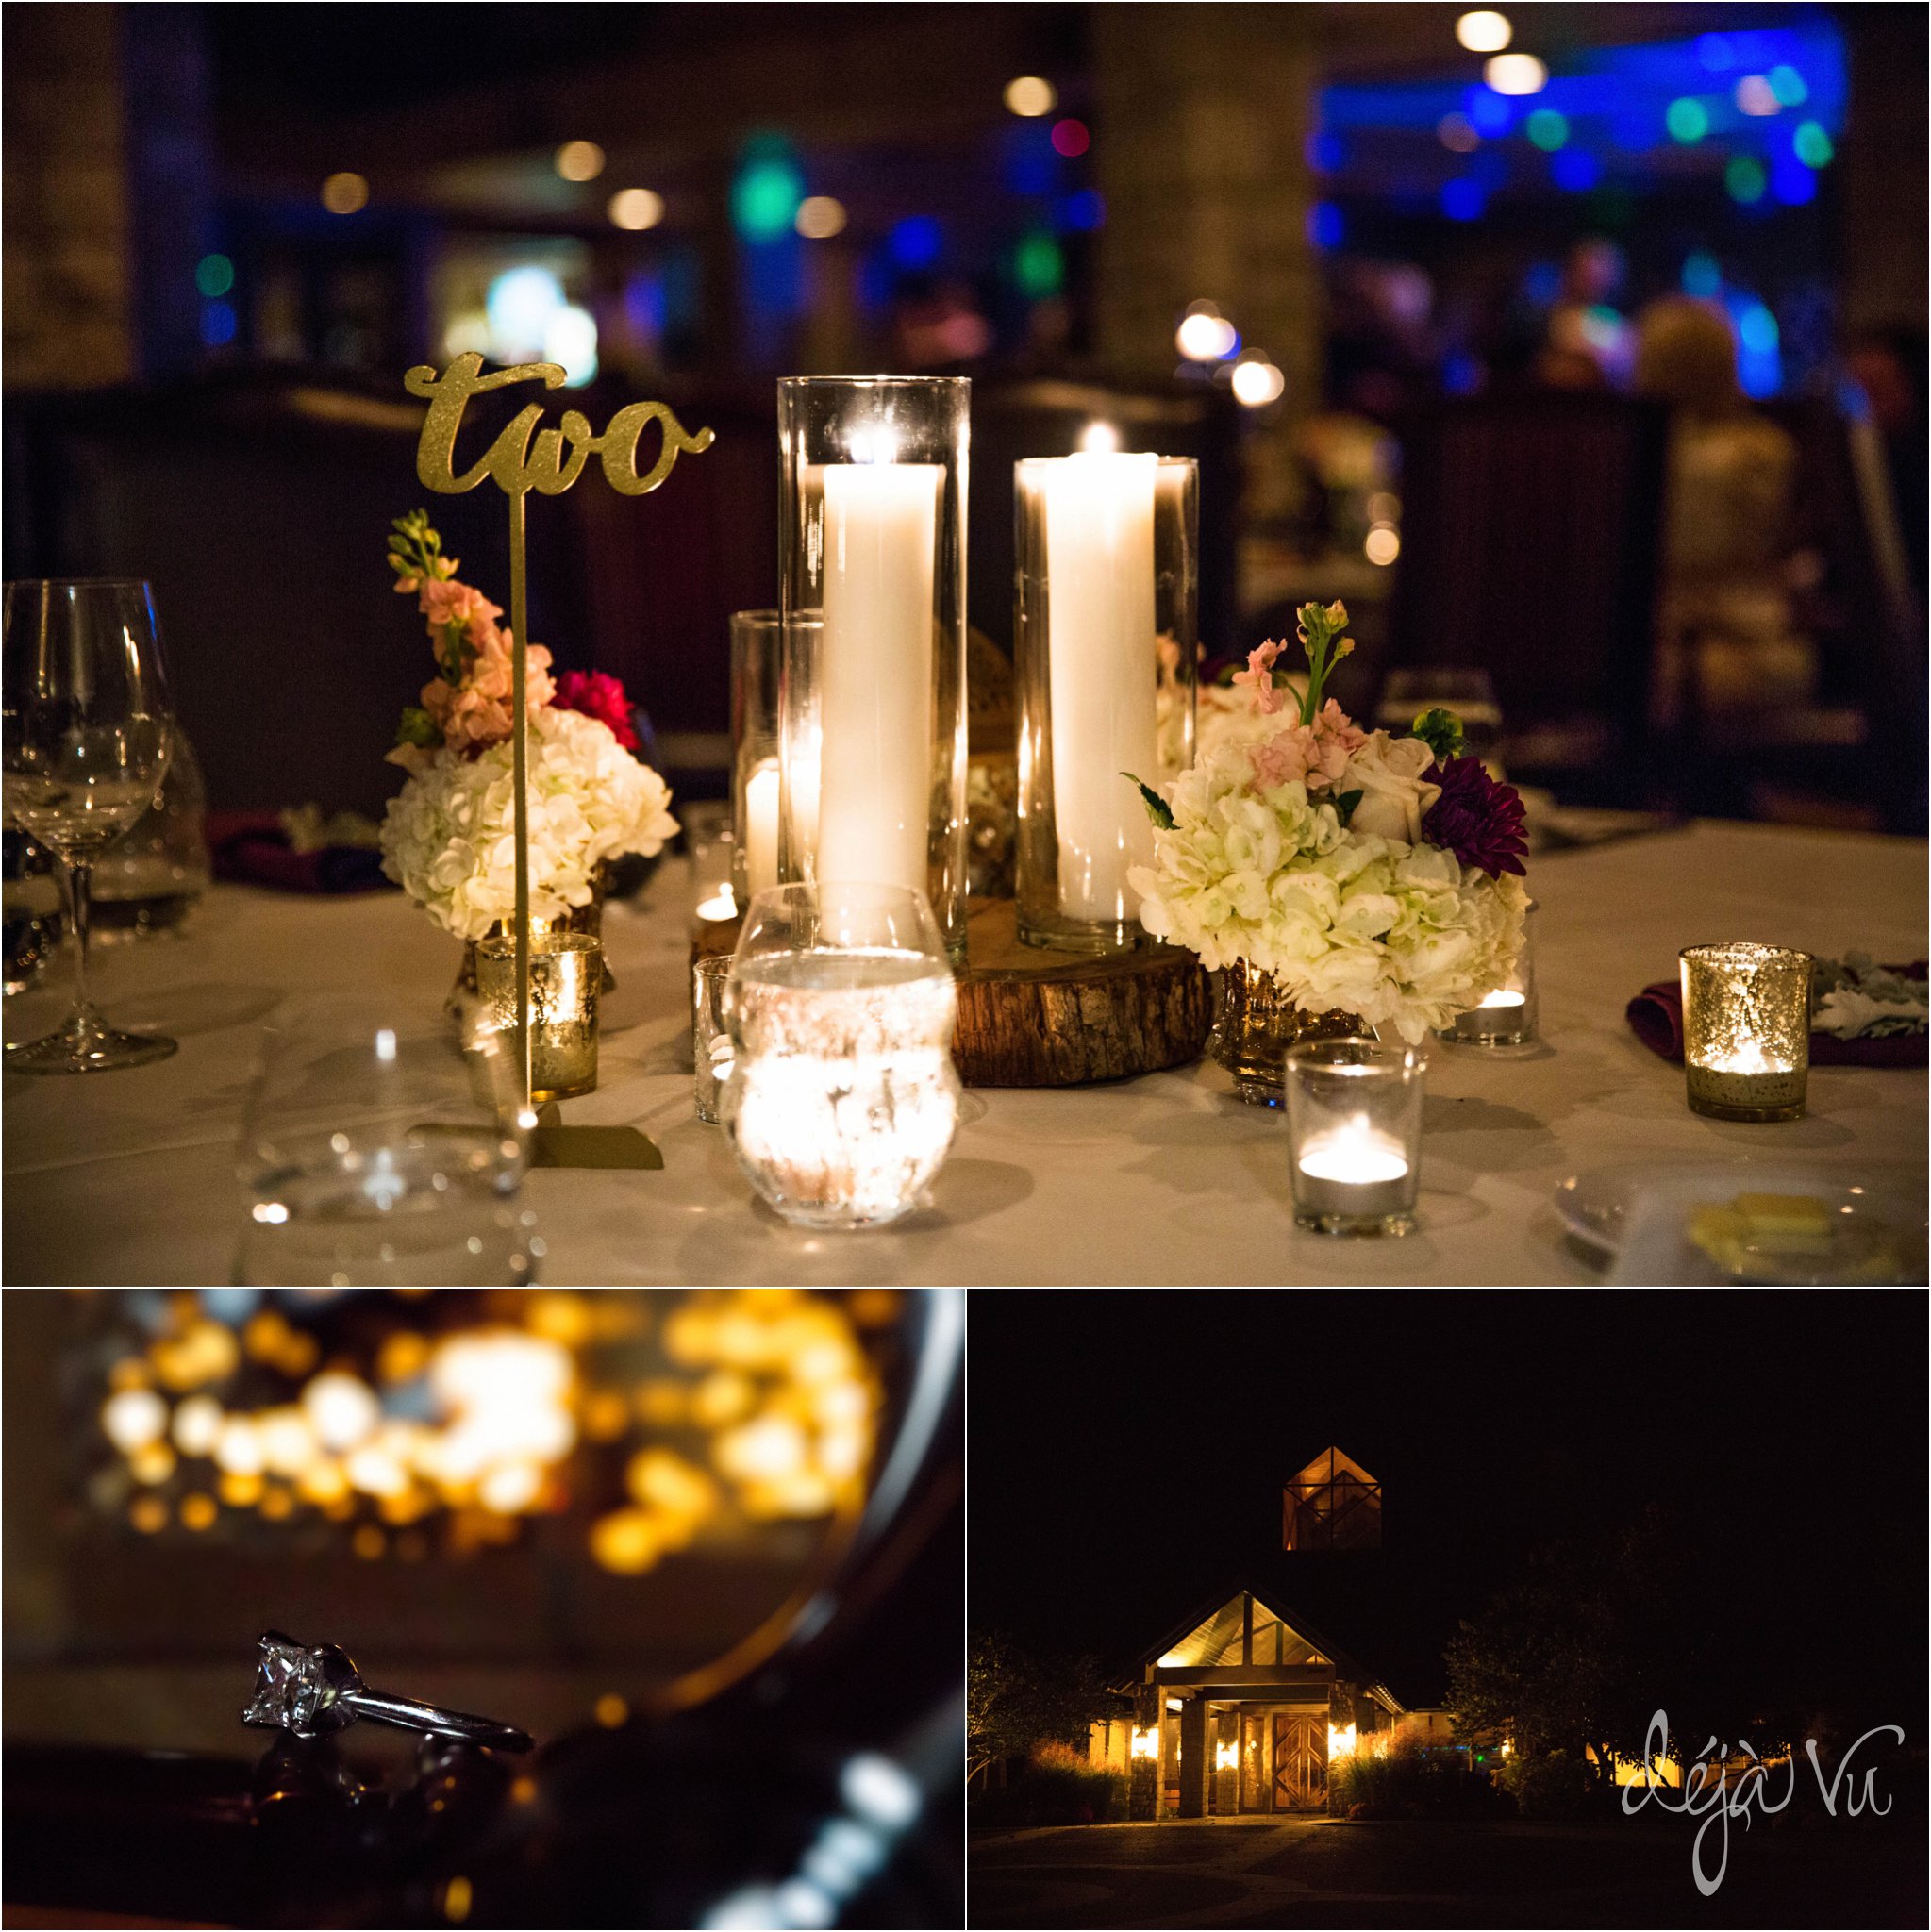 Shadow Glen Country Club Wedding | reception center pieces | Images by: www.feliciathephotographer.com